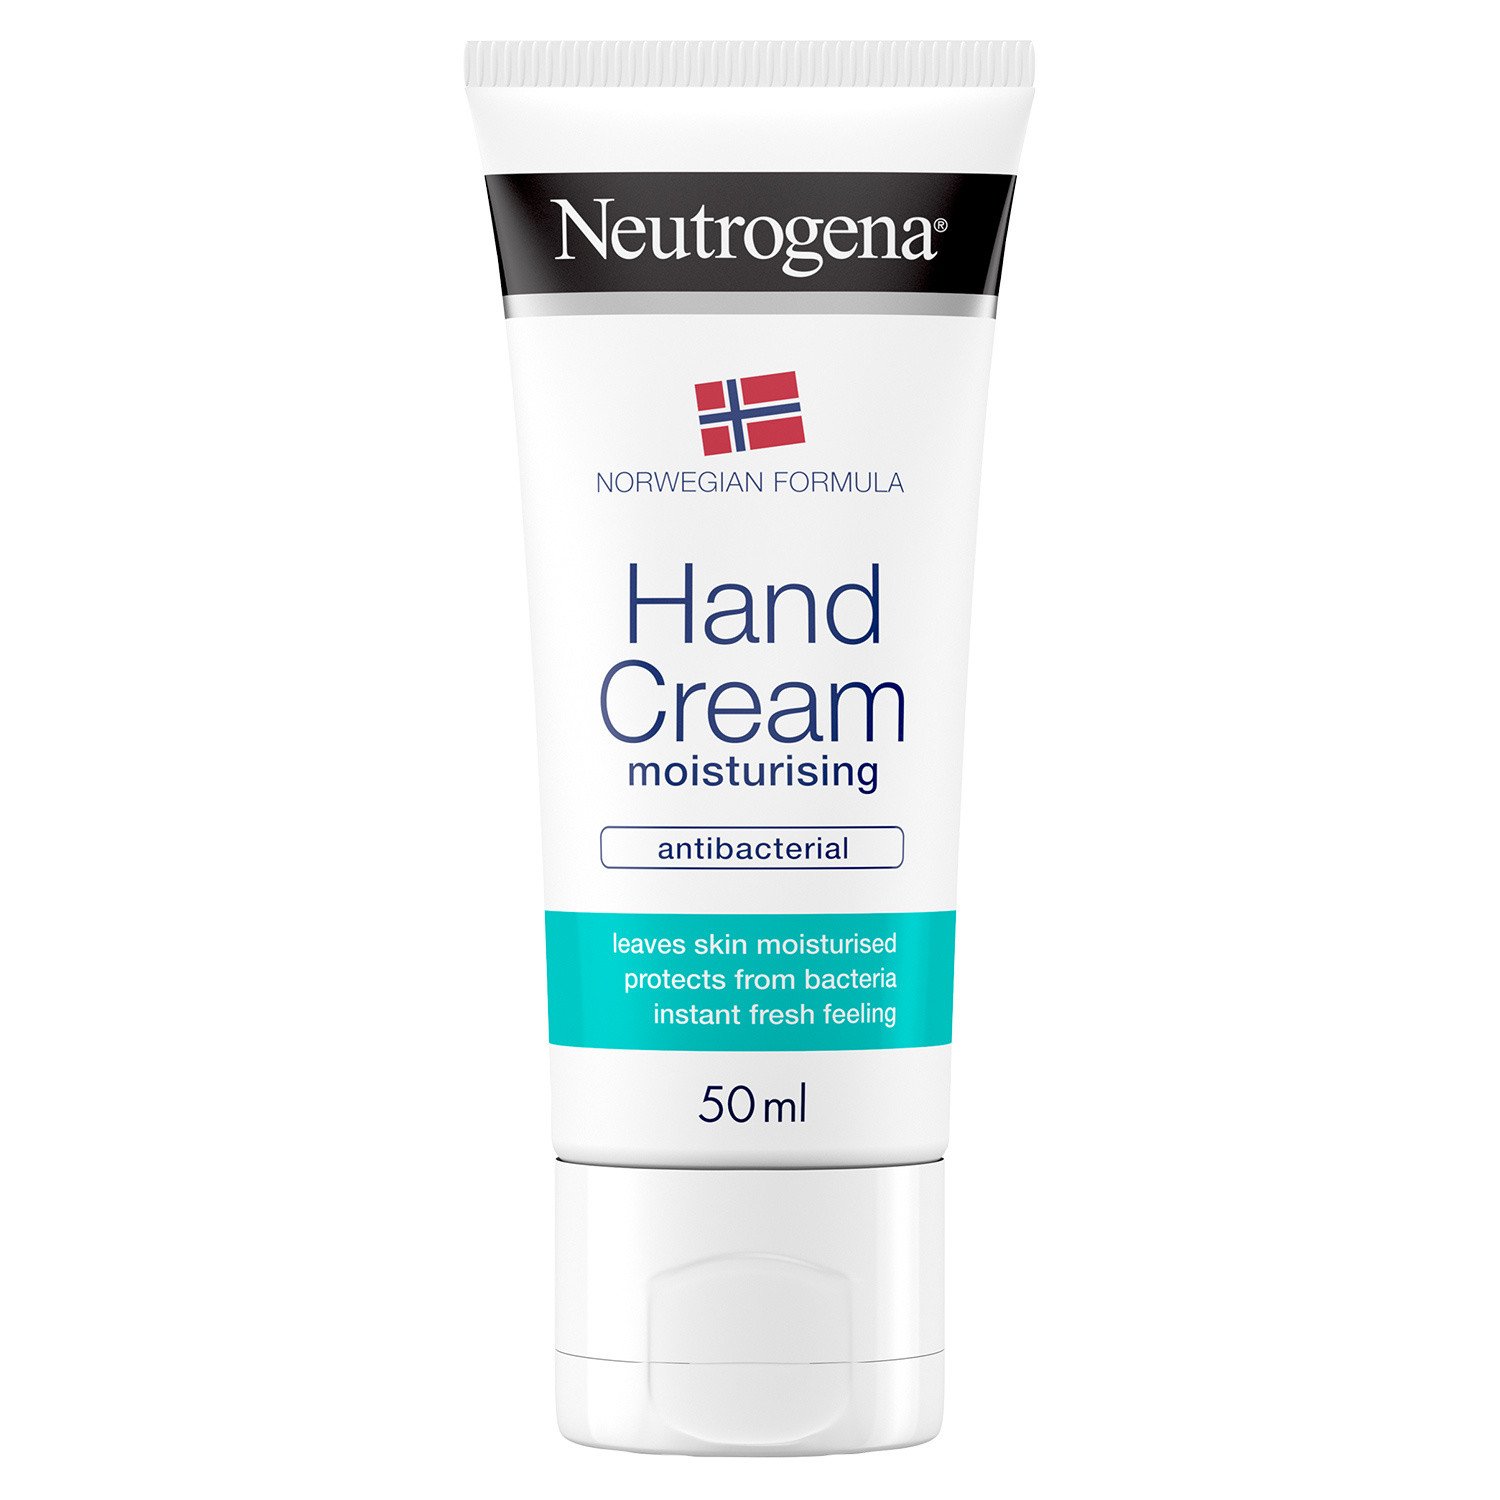 Neutrogena Norwegian Formula Anti-Bacterial Hand Cream 50ml